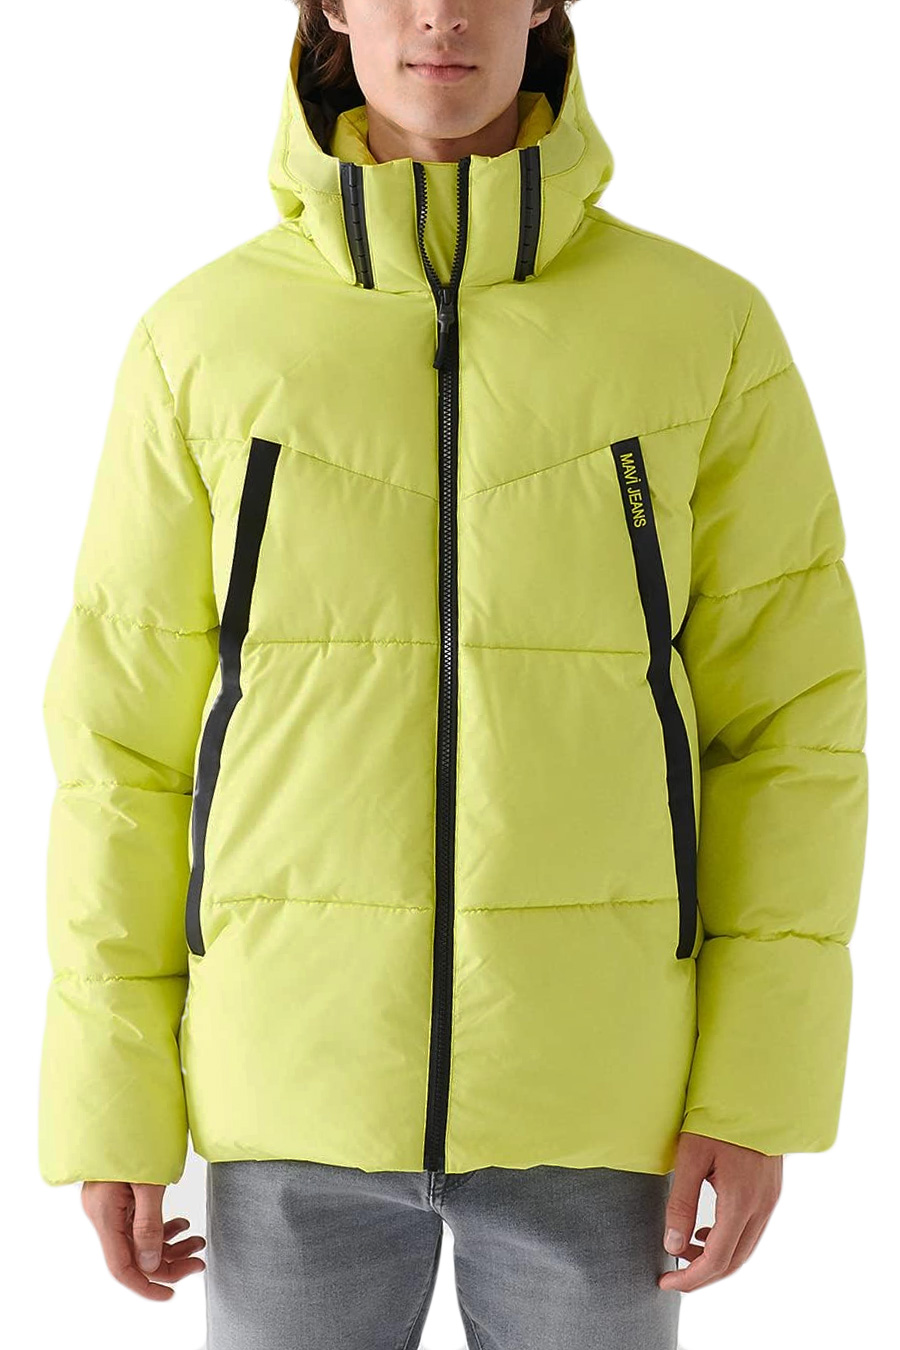 Winter jacket MAVI 0110068-71533